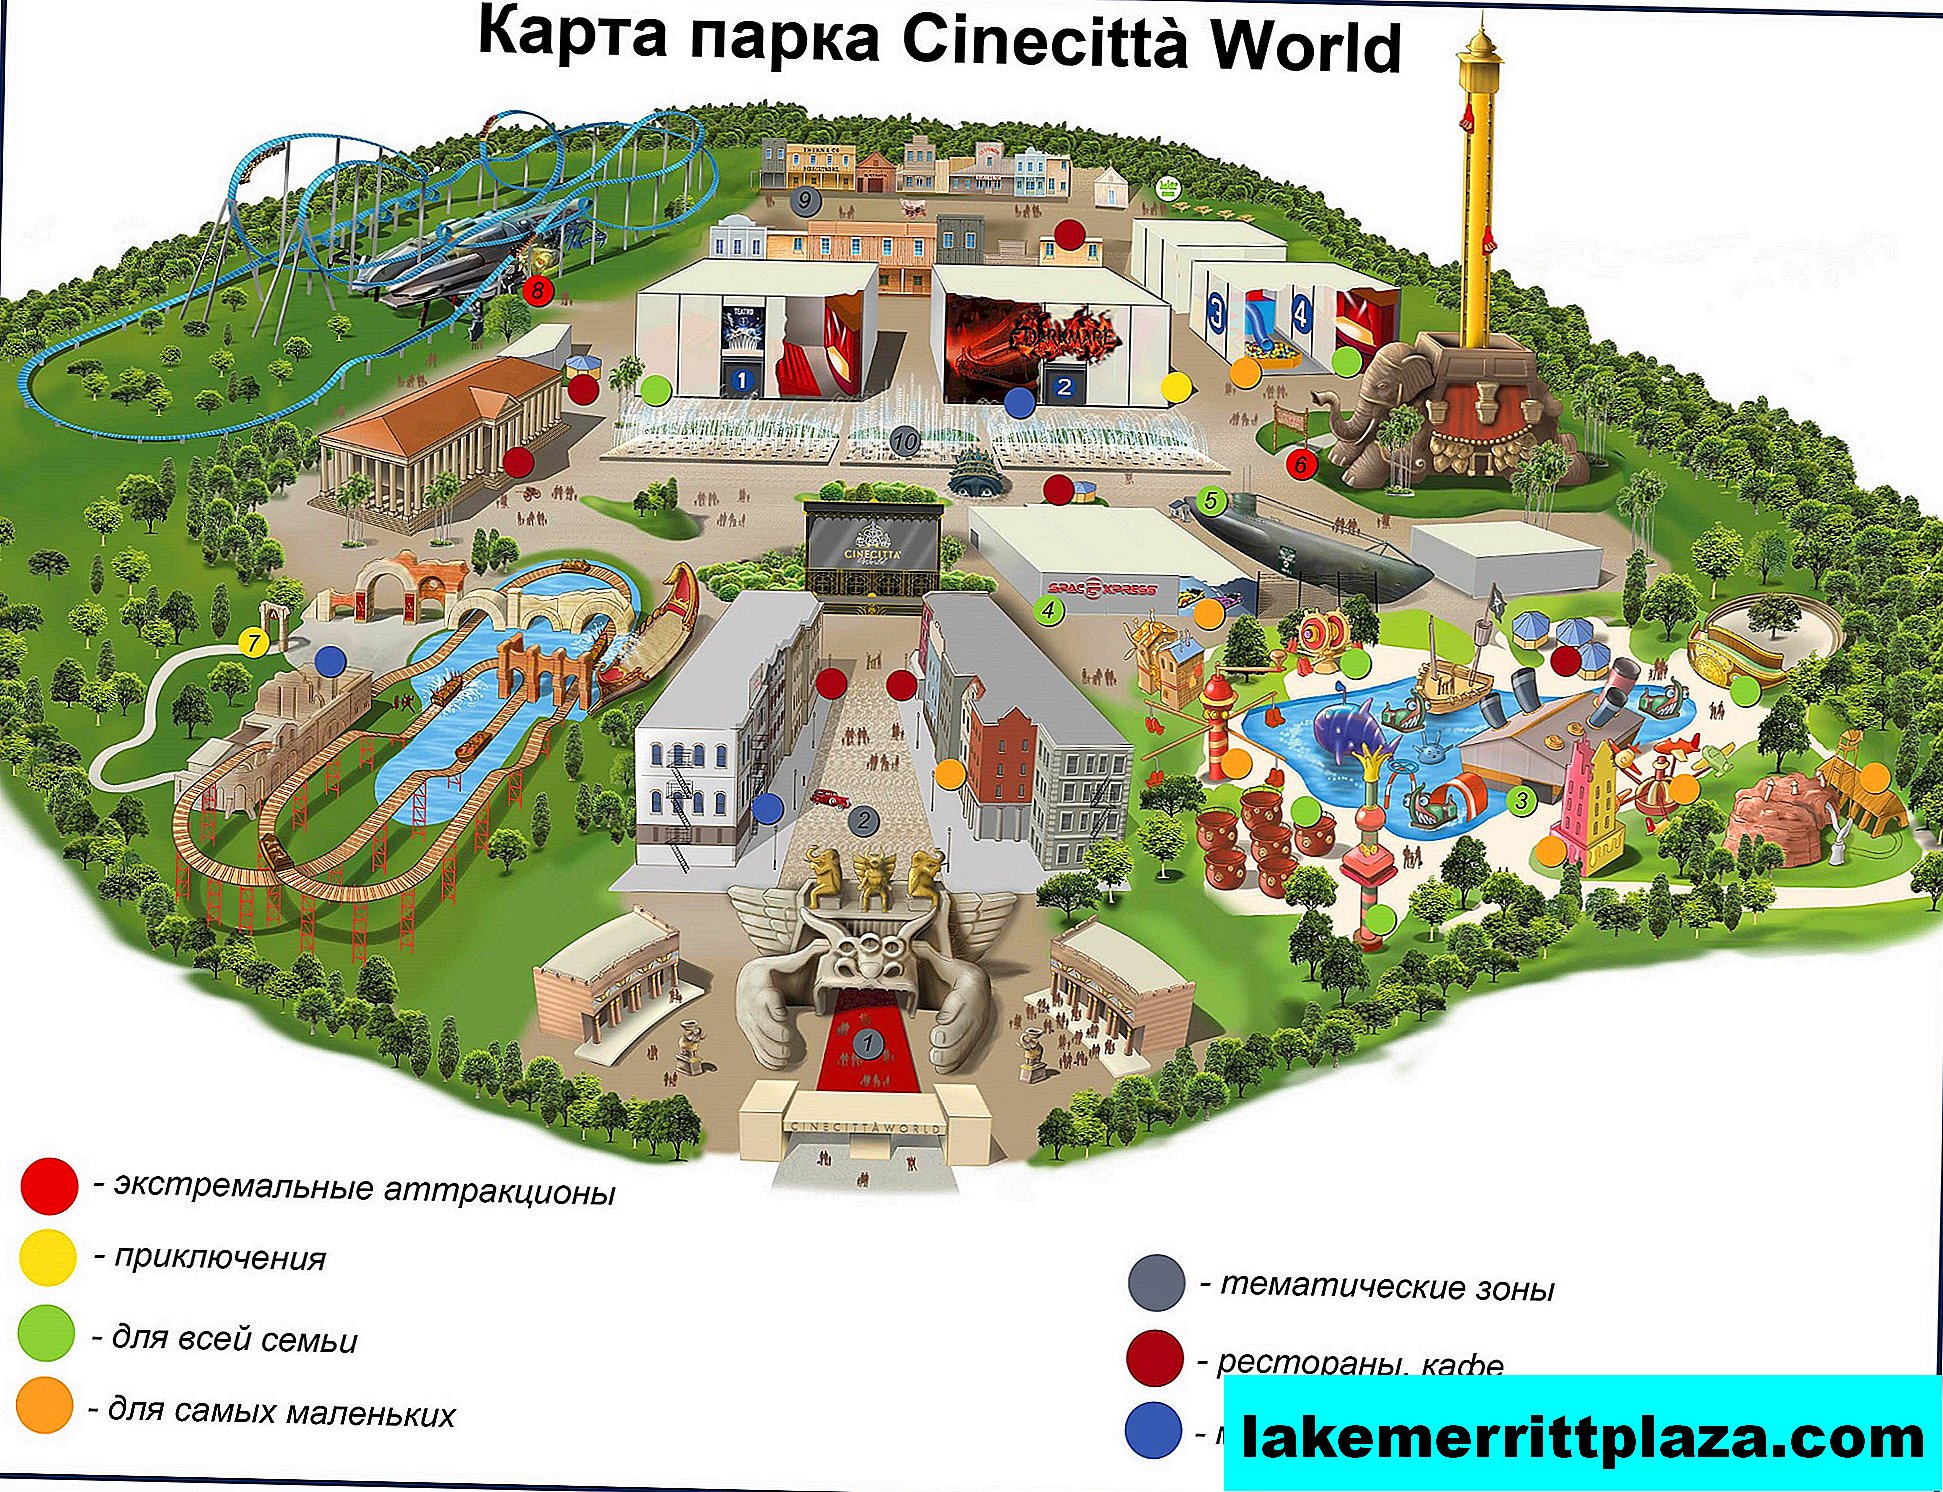 Cinechitta World - أول حديقة سينما في إيطاليا للأطفال والكبار